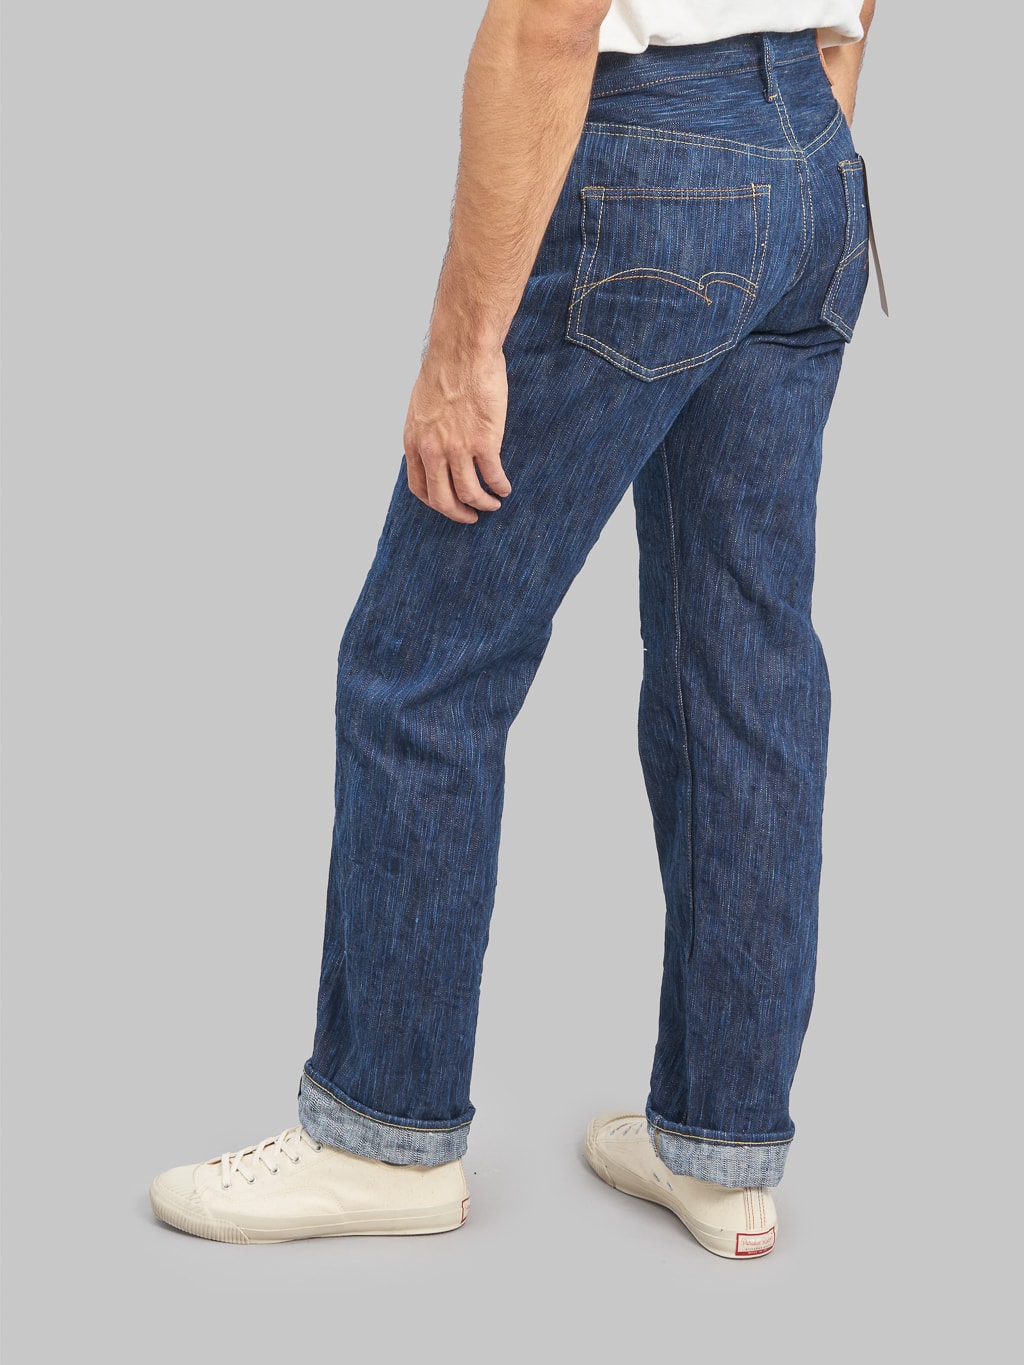 Studio dartisan tokushima awa shoai regular straight jeans back fit leg